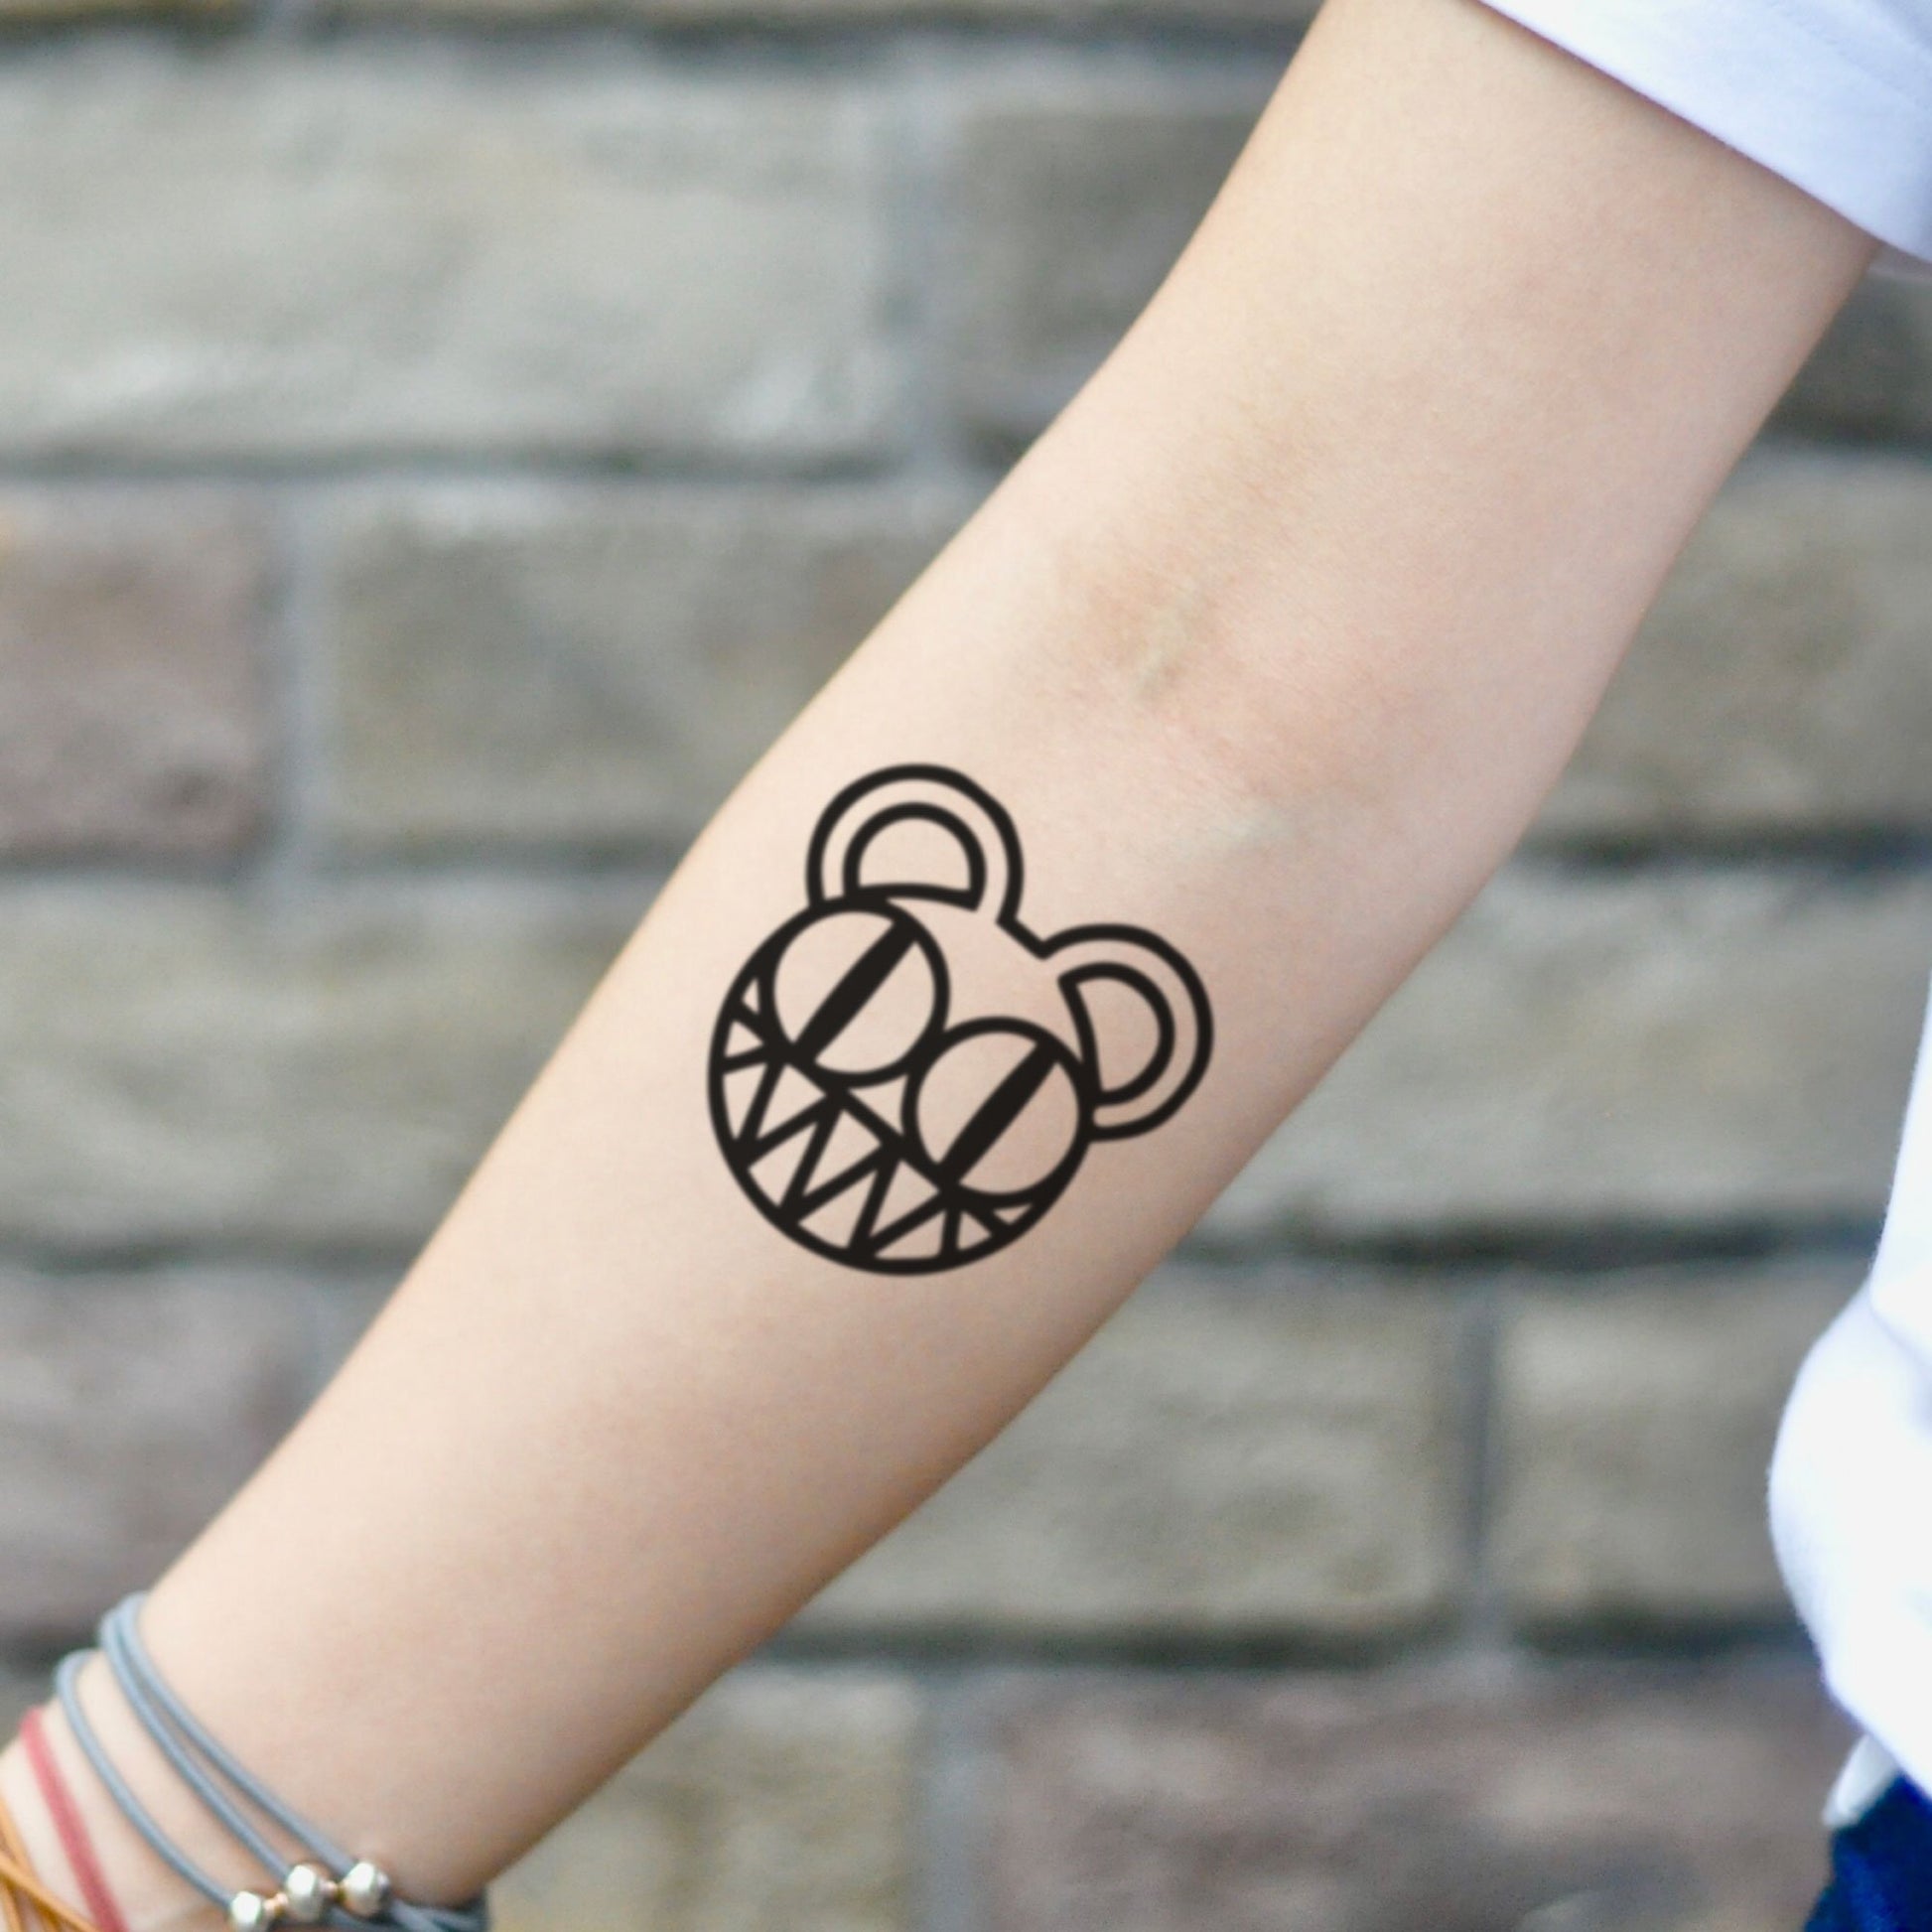 fake small radiohead minimalist temporary tattoo sticker design idea on inner arm